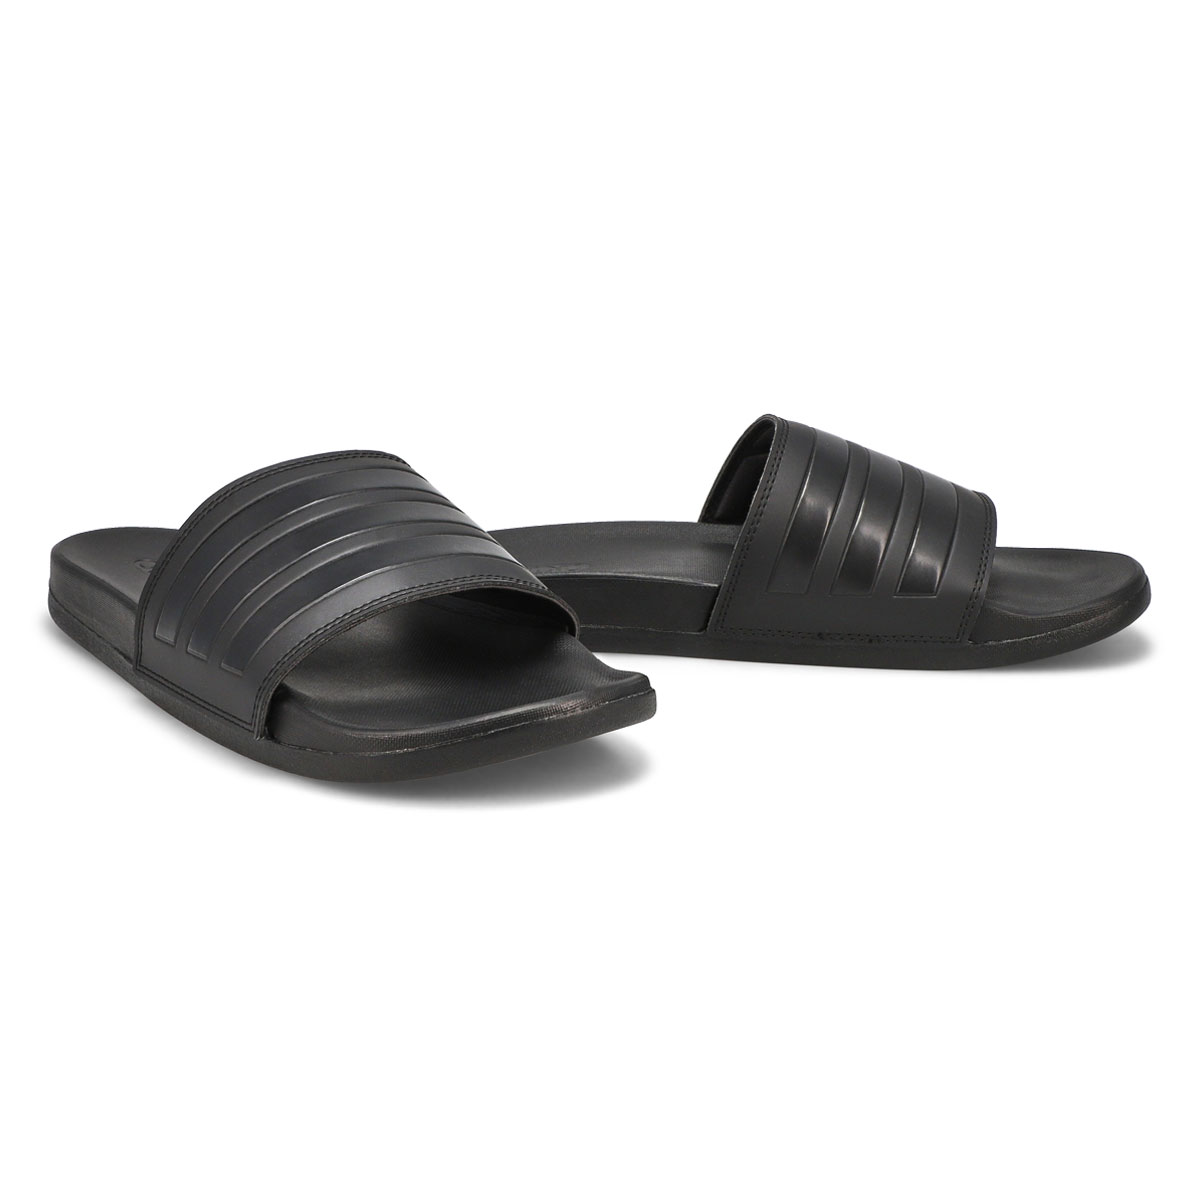 ADIDAS Duramo Slide Slippers - Buy BLACK1/WHT/BLACK1 Color ADIDAS Duramo Slide  Slippers Online at Best Price - Shop Online for Footwears in India |  Flipkart.com